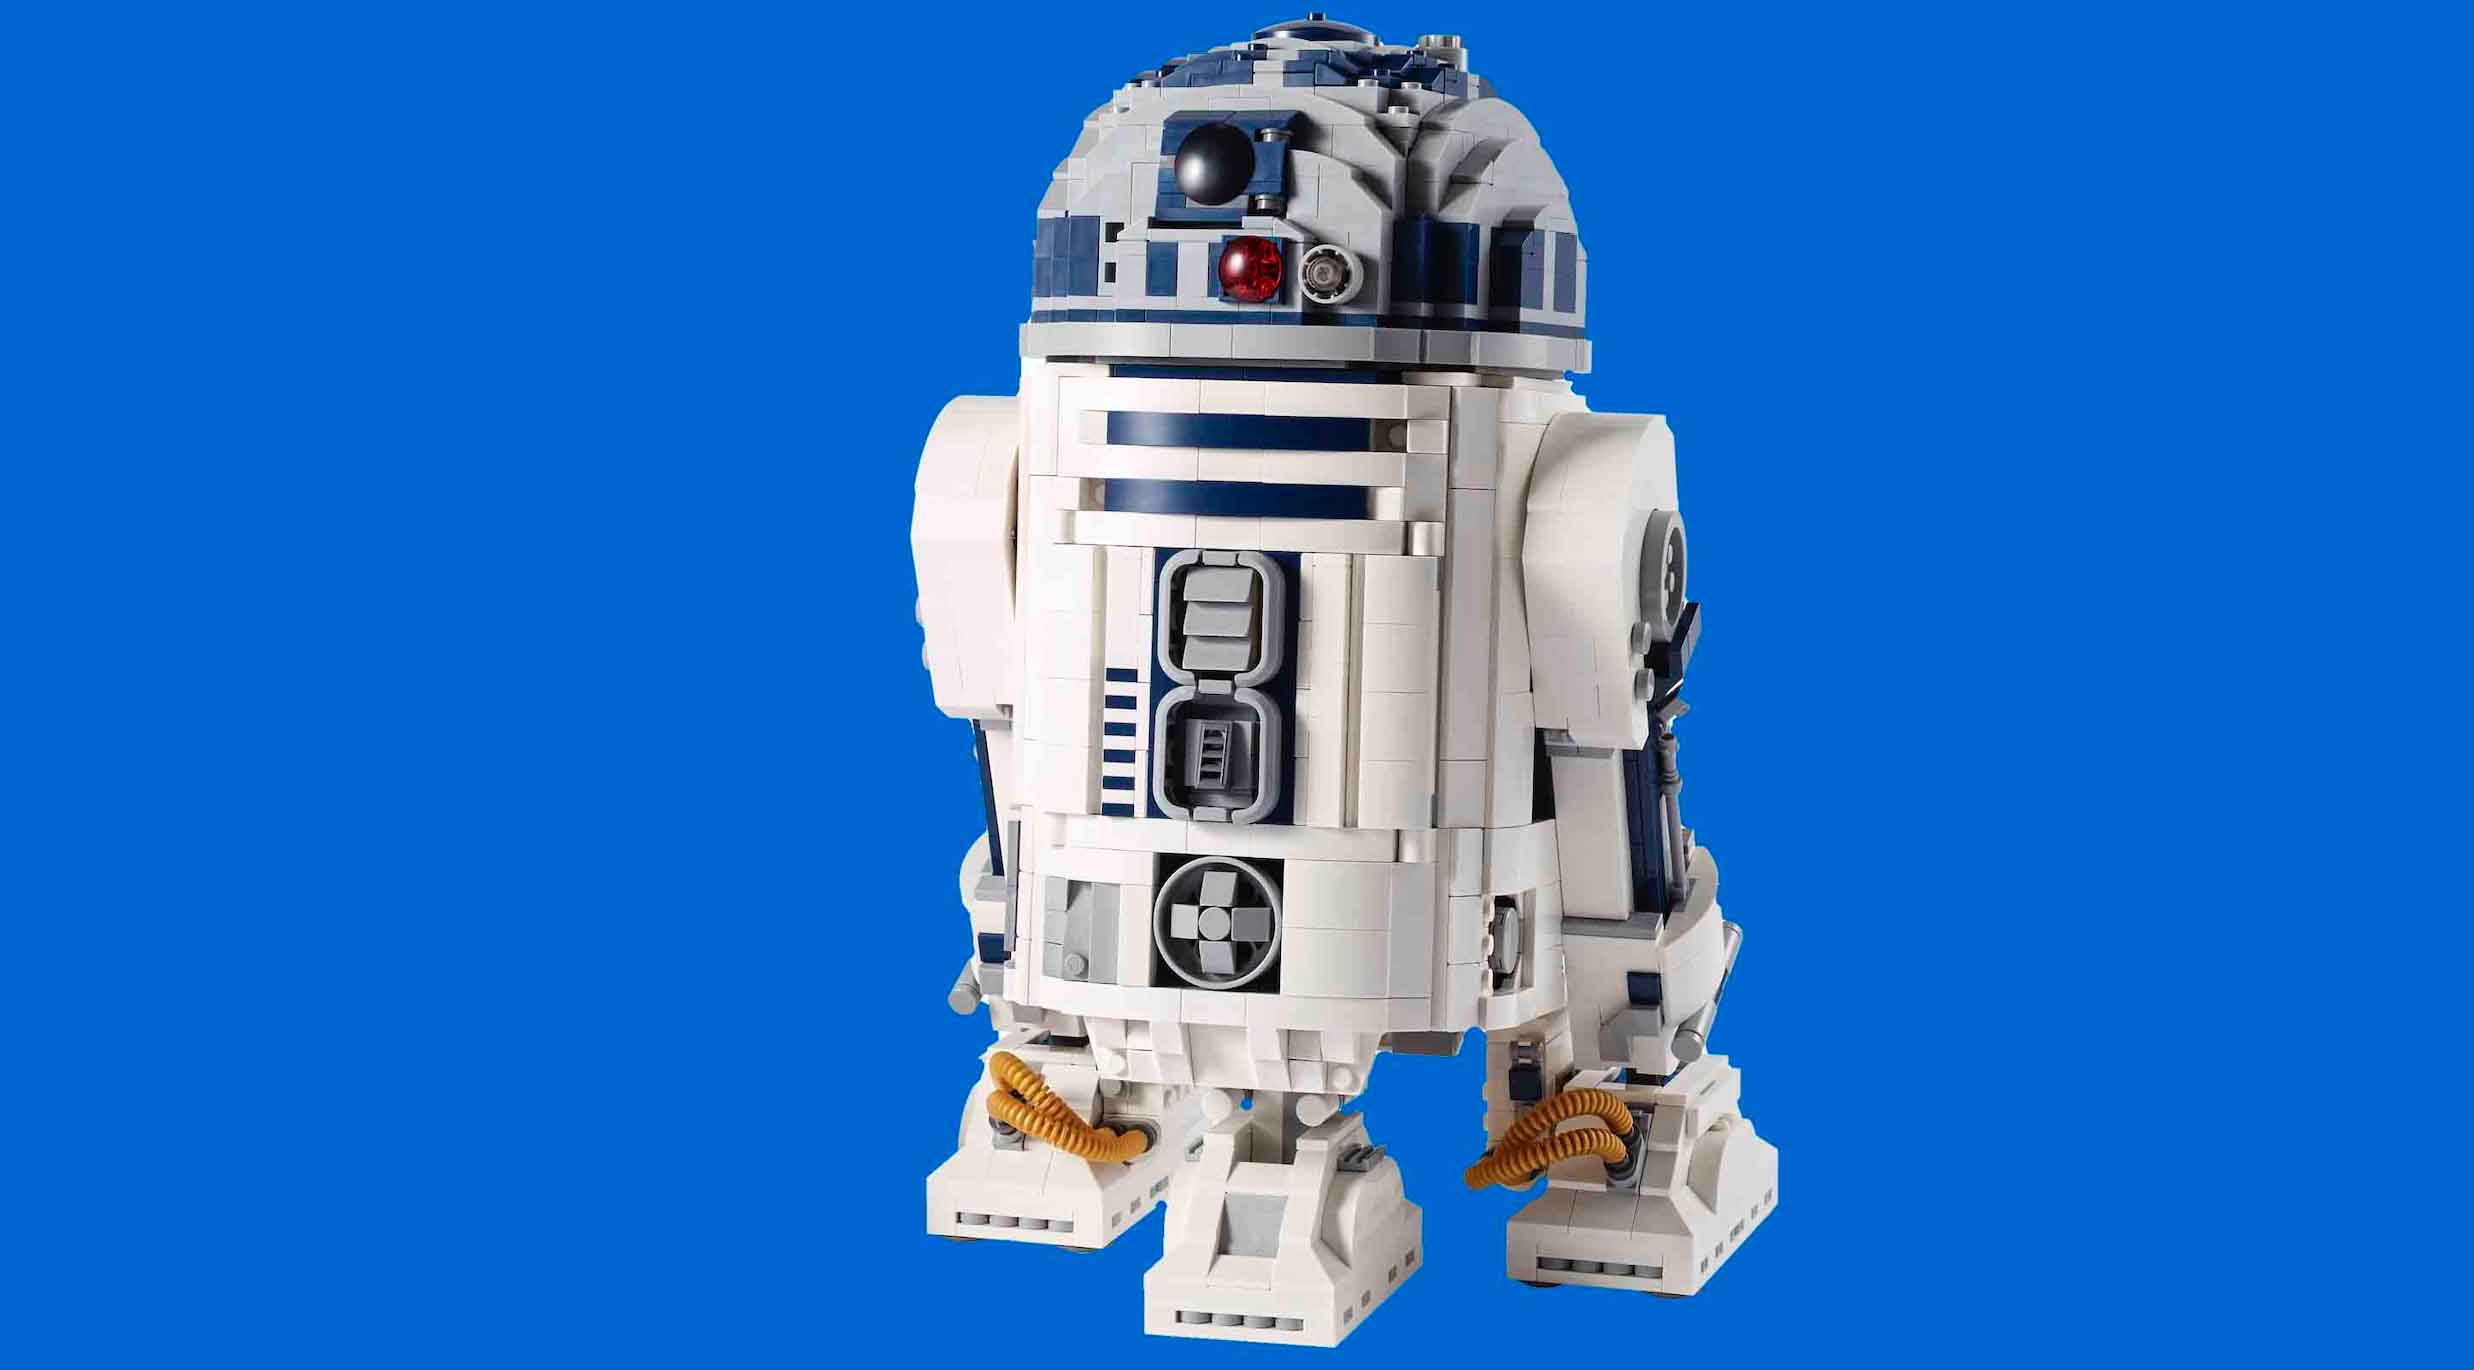 LEGO Wars R2-D2 construction is a droid dream come true